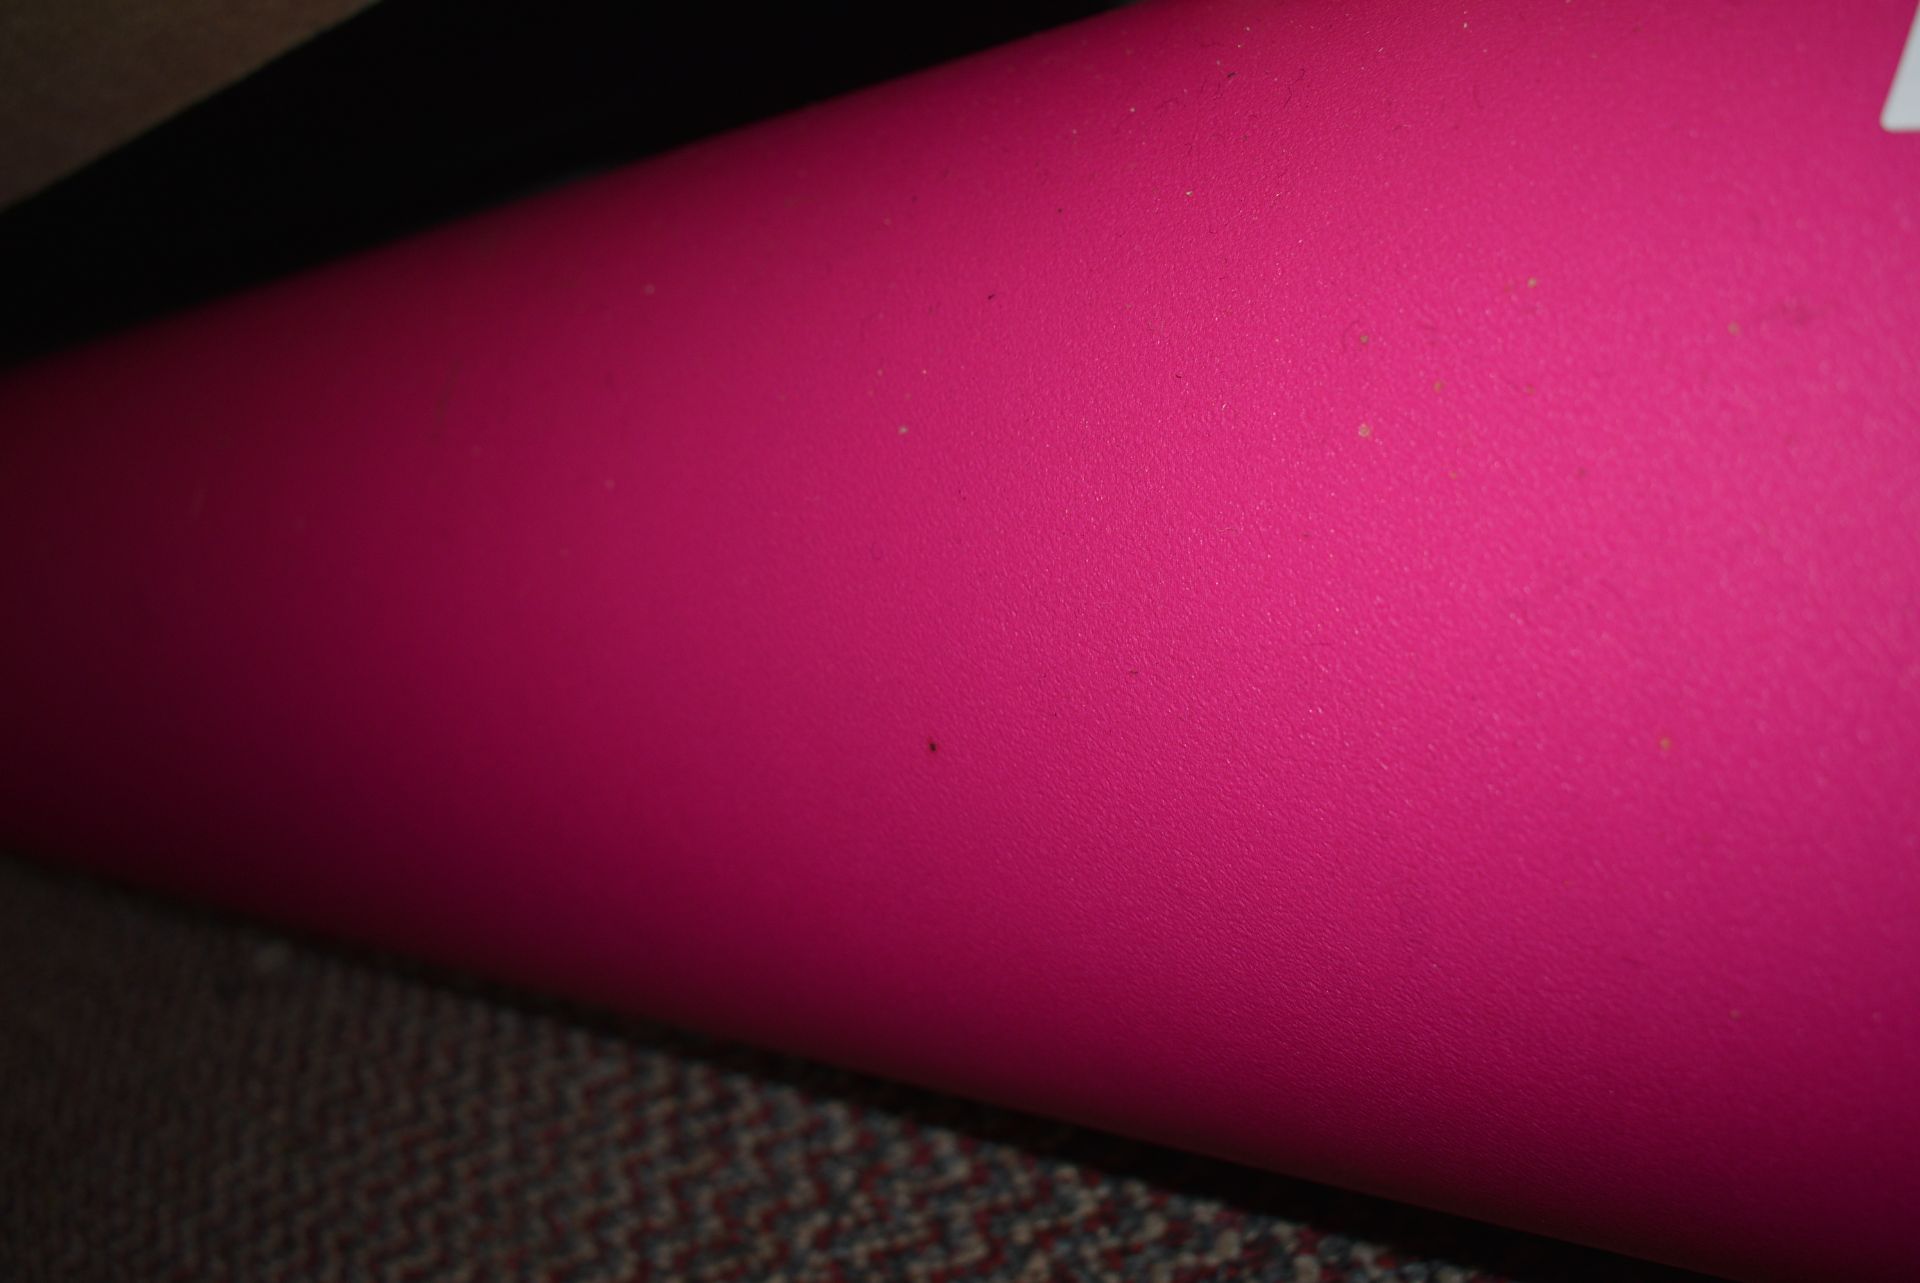 4m wide Roll of Pink Vinyl Flooring